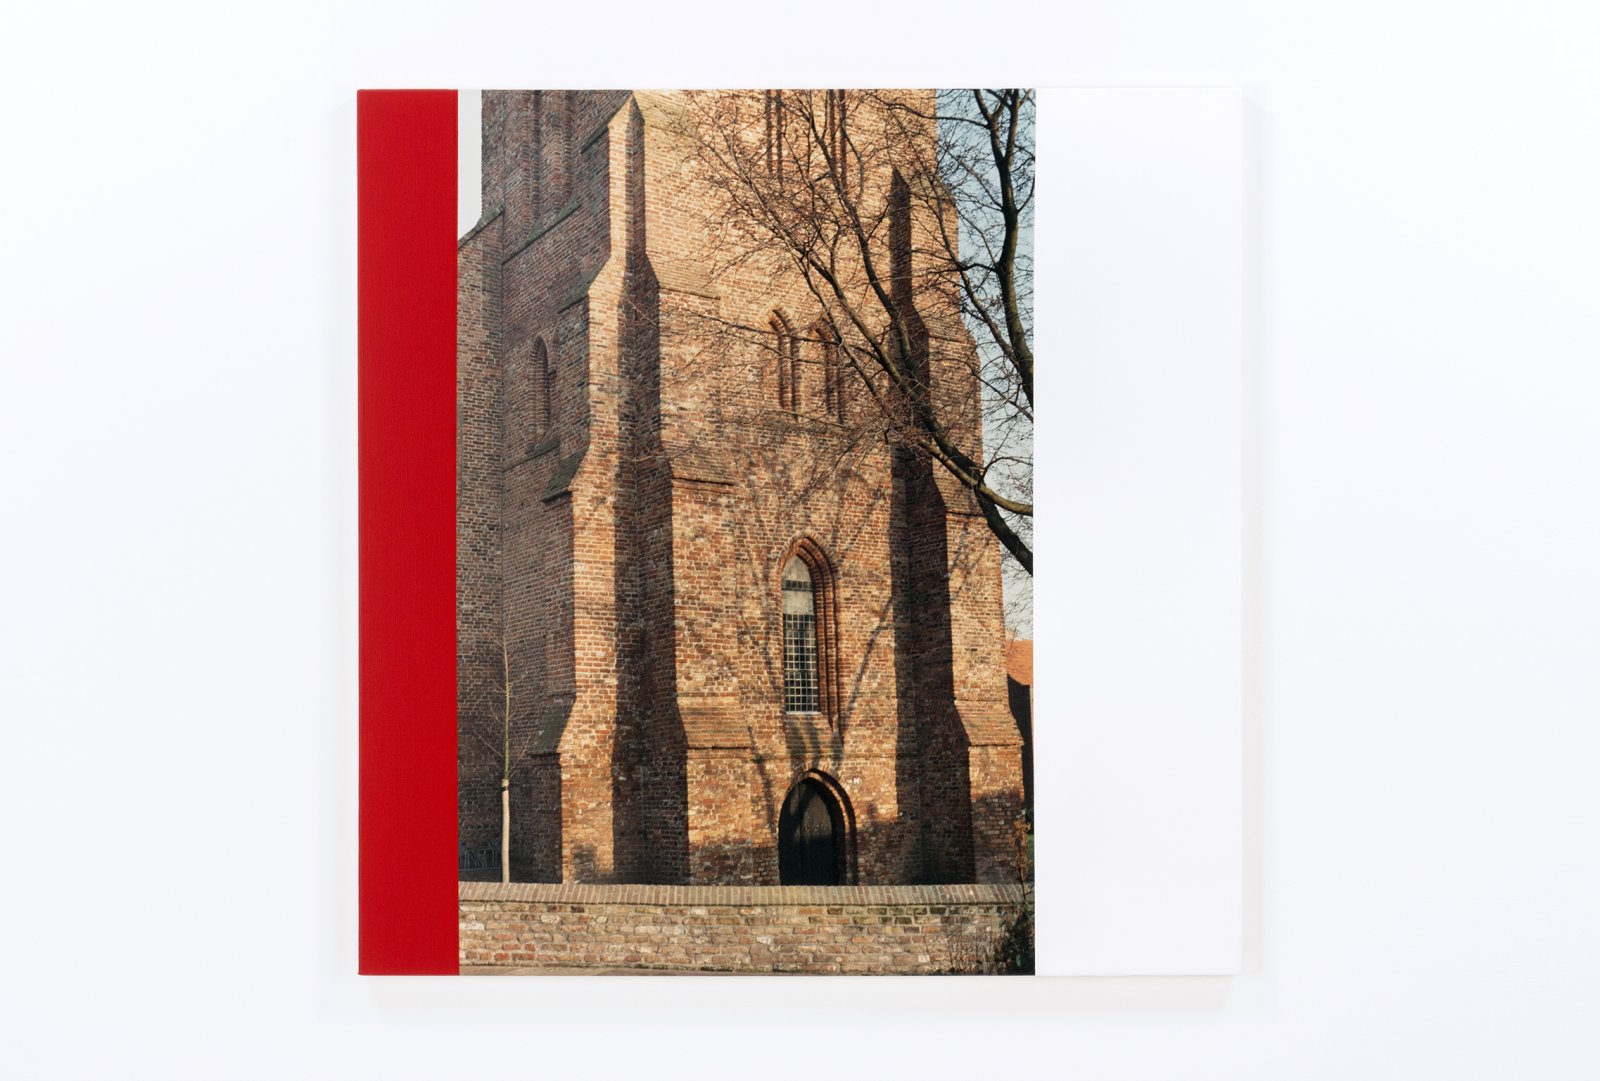 Ian Wallace, Hommage a Mondrian XIX (Church at Domburg), 1990, photolaminate and acrylic on canvas, 48 x 48 in. (122 x 122 cm)